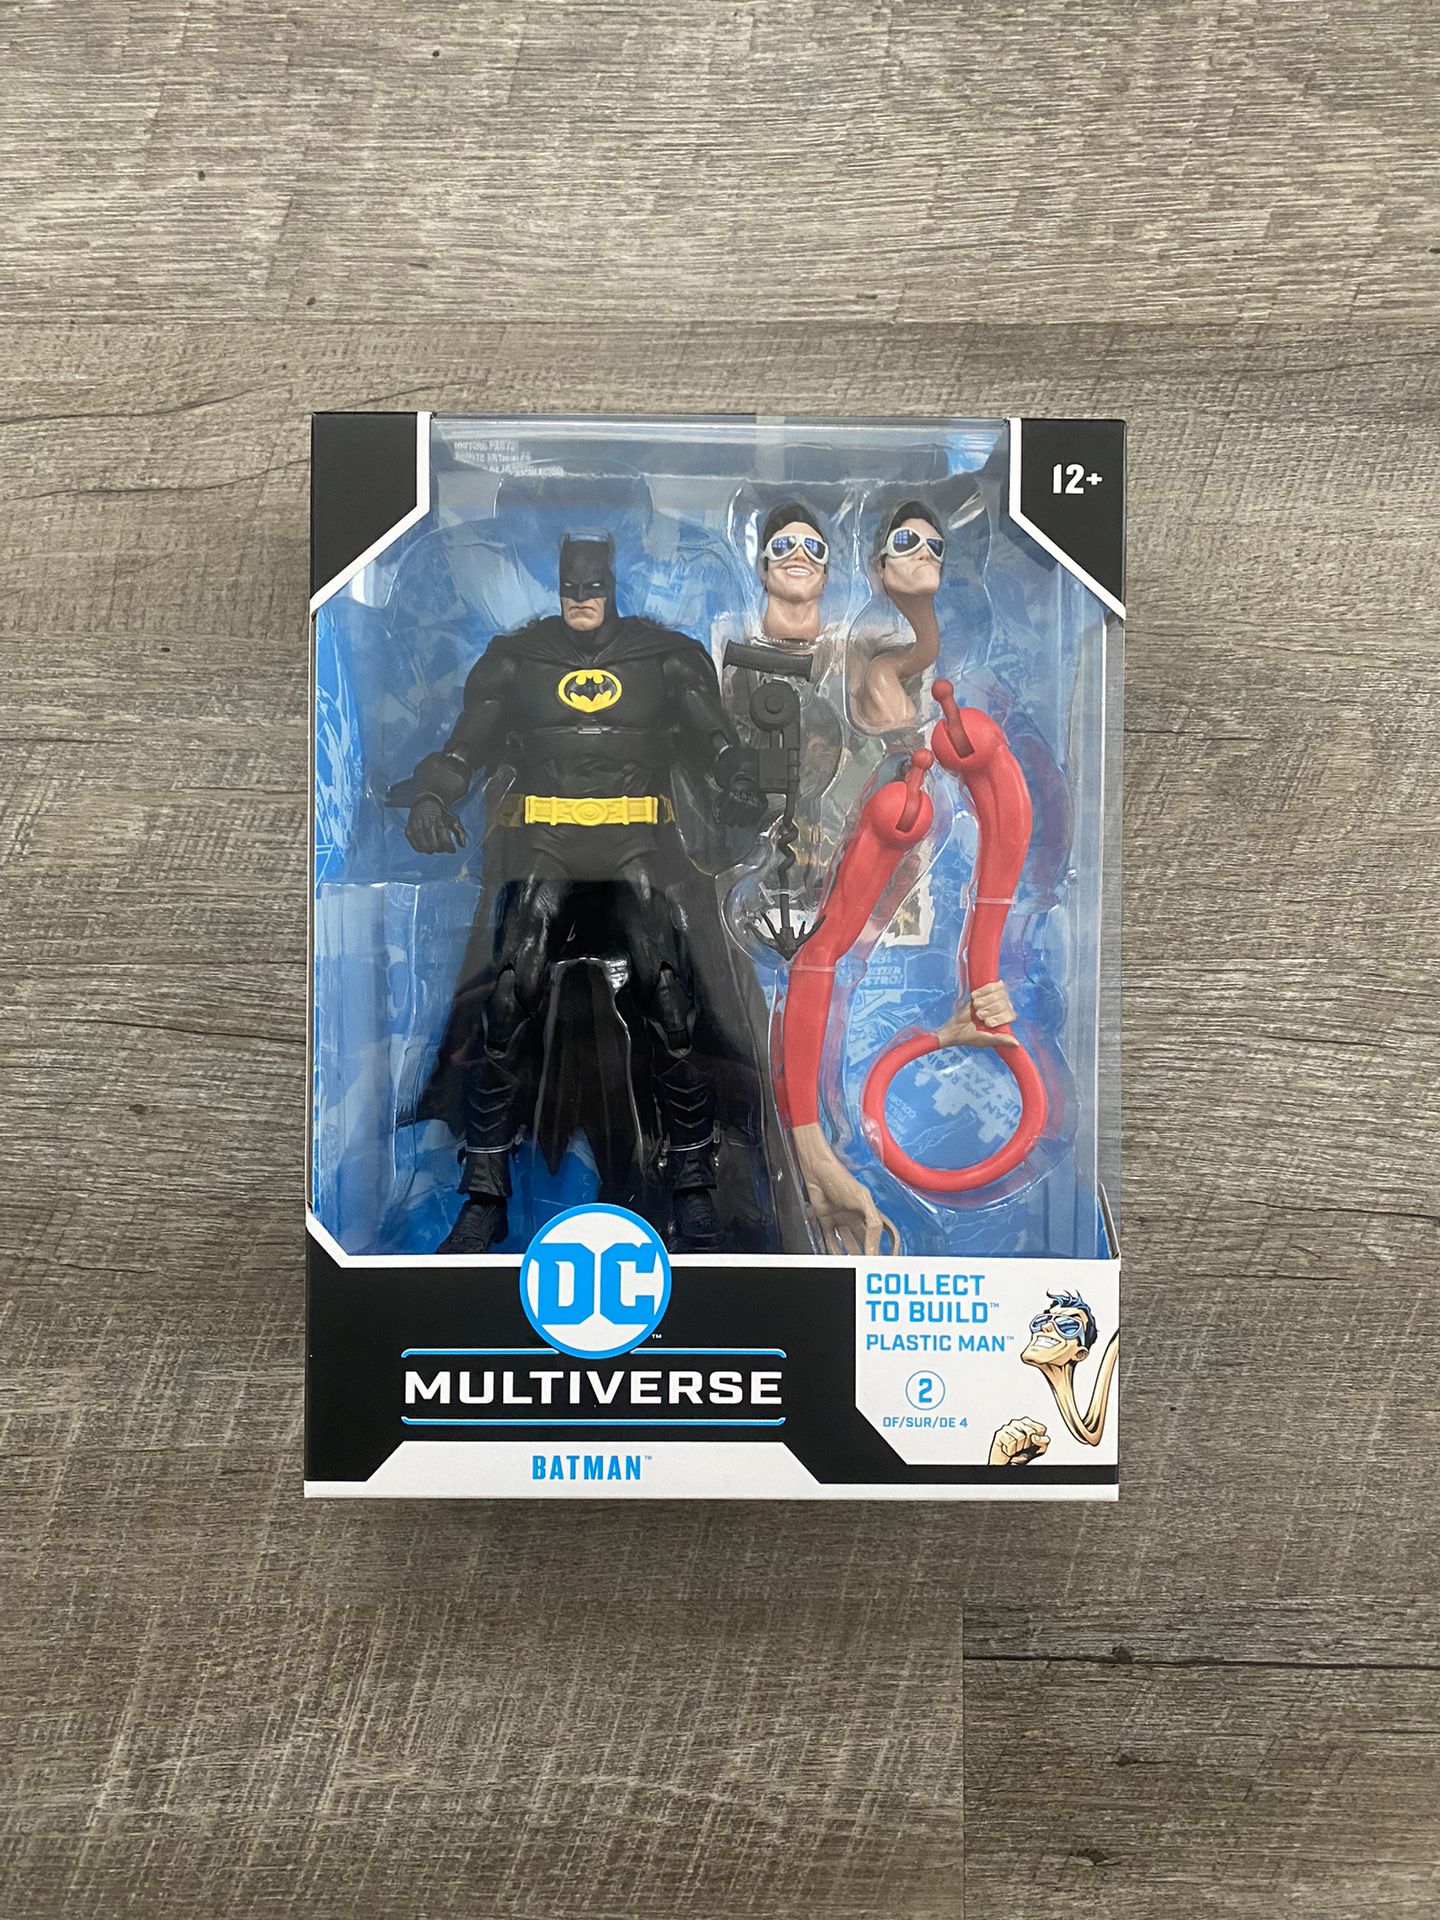 In Hand, Brand New, Never Opened McFarlane DC Multiverse JLA Batman - 7” Action Figure